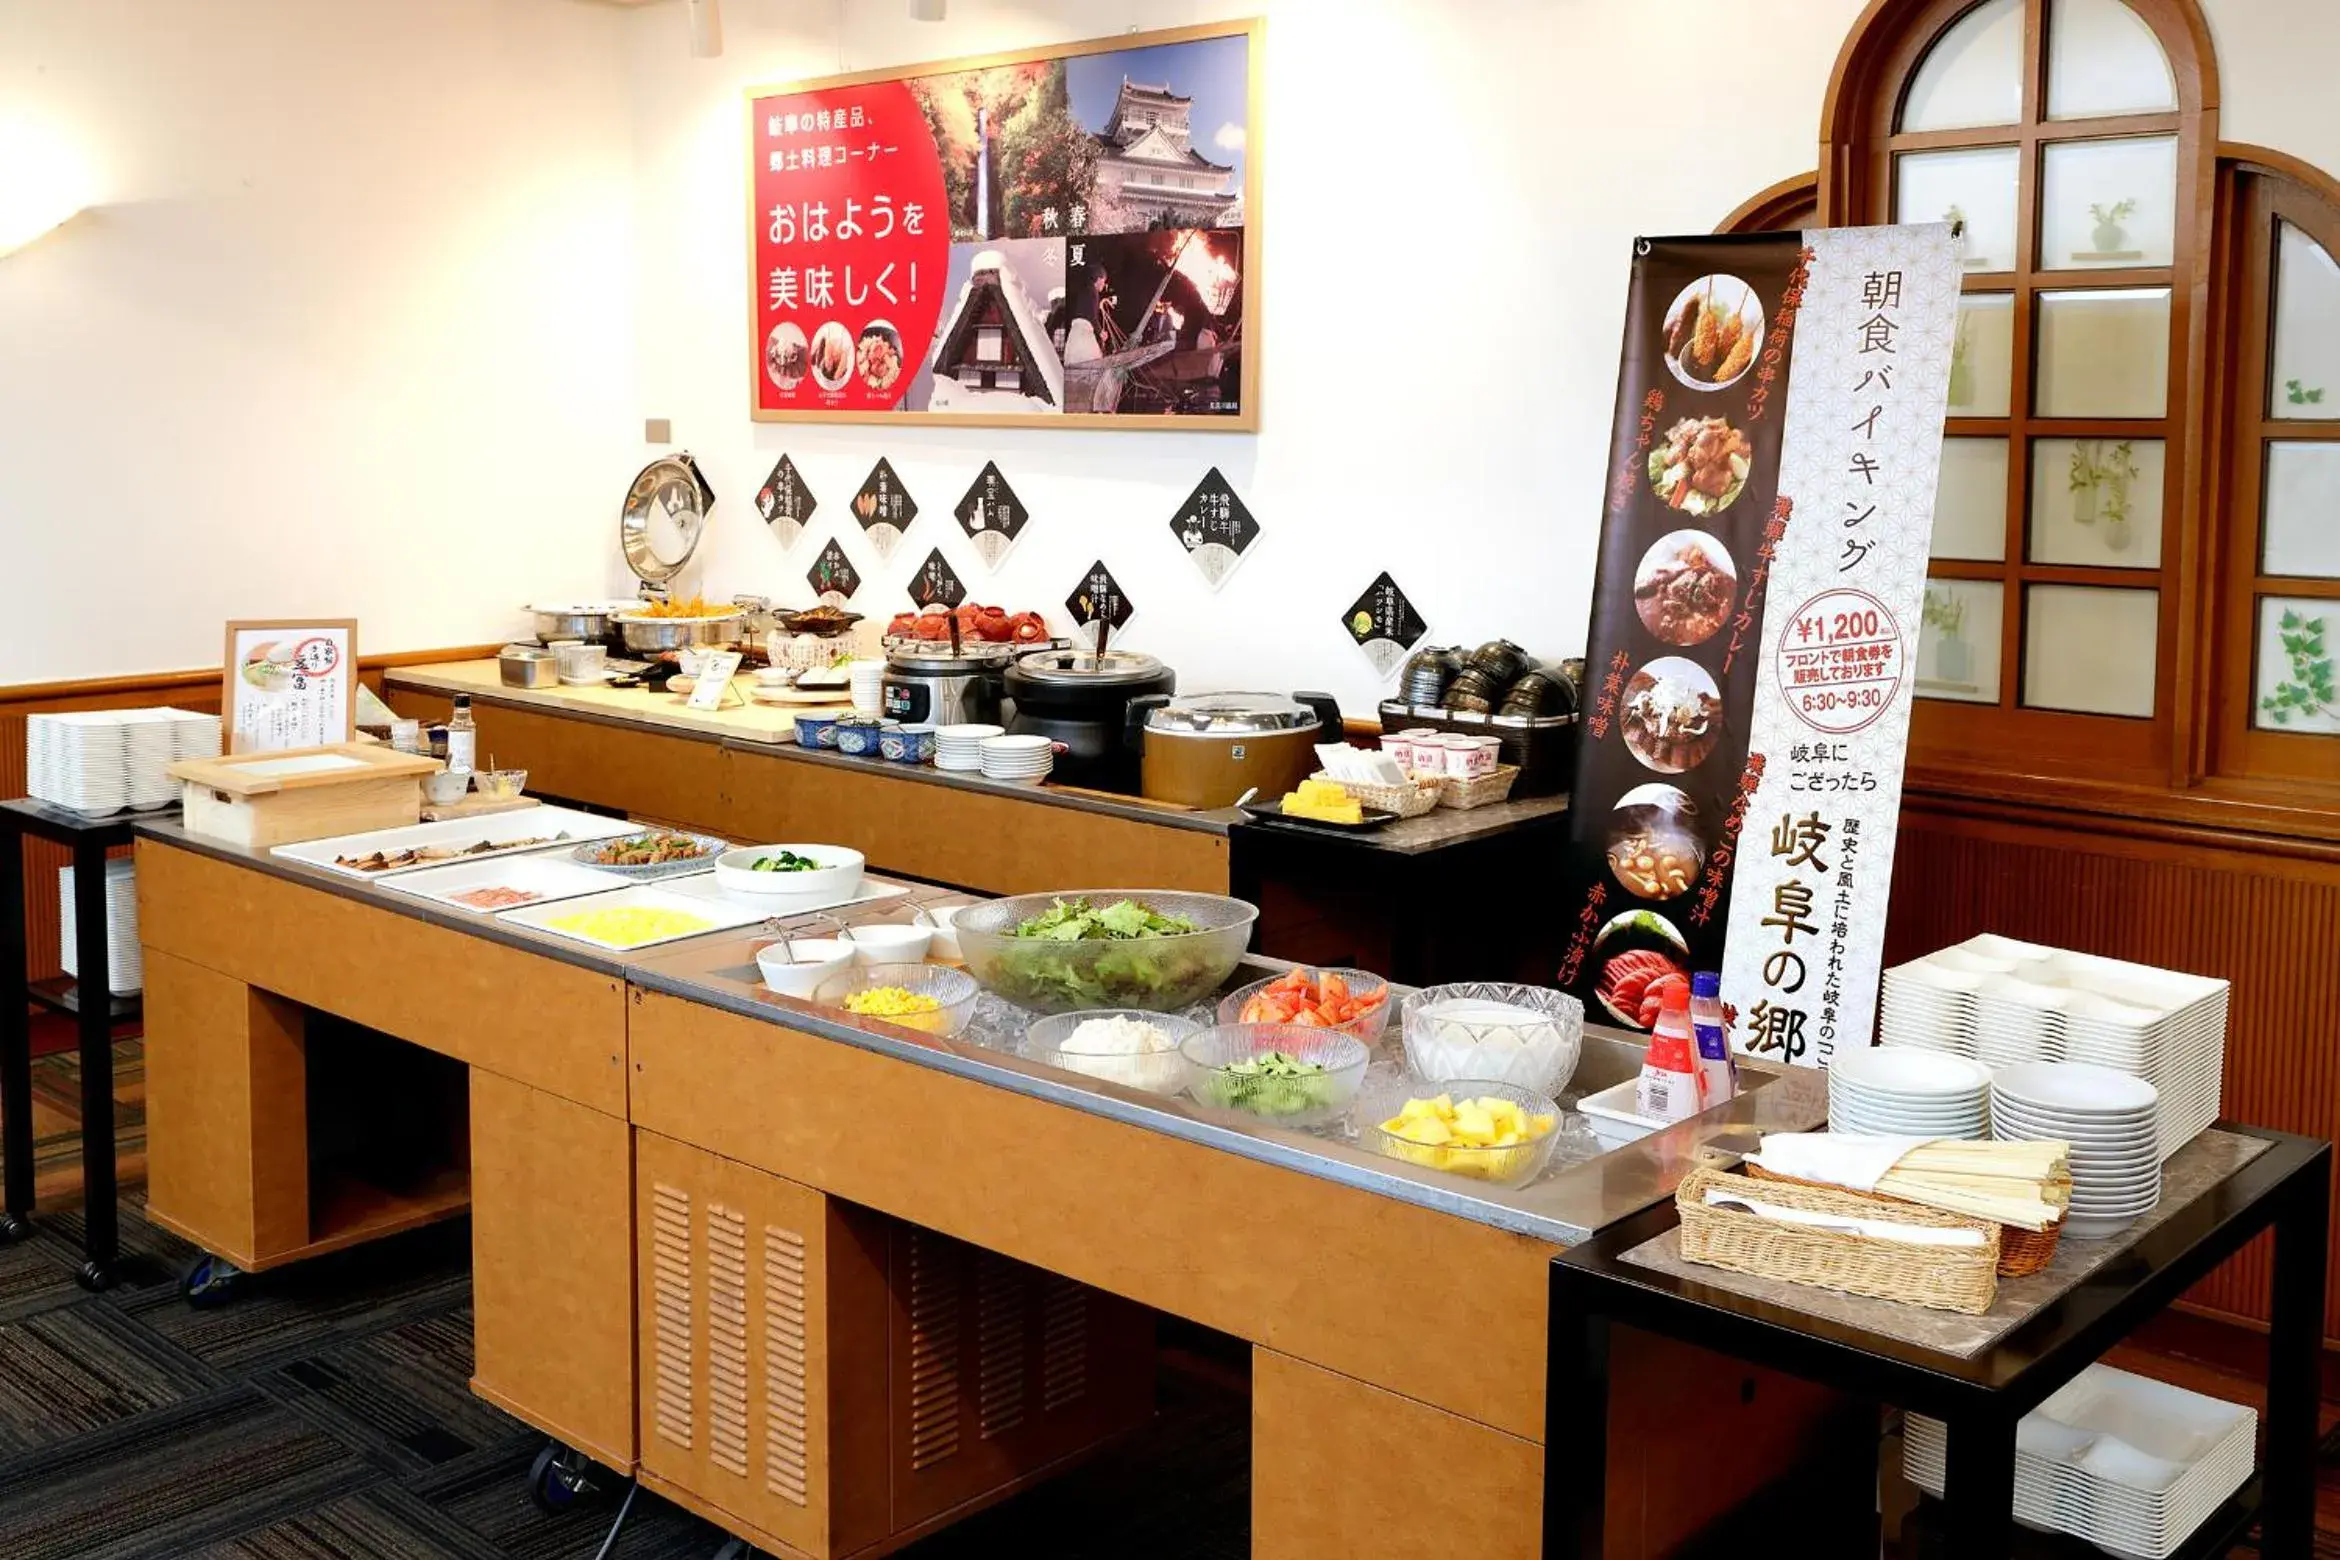 Buffet breakfast in Gifu Washington Hotel Plaza